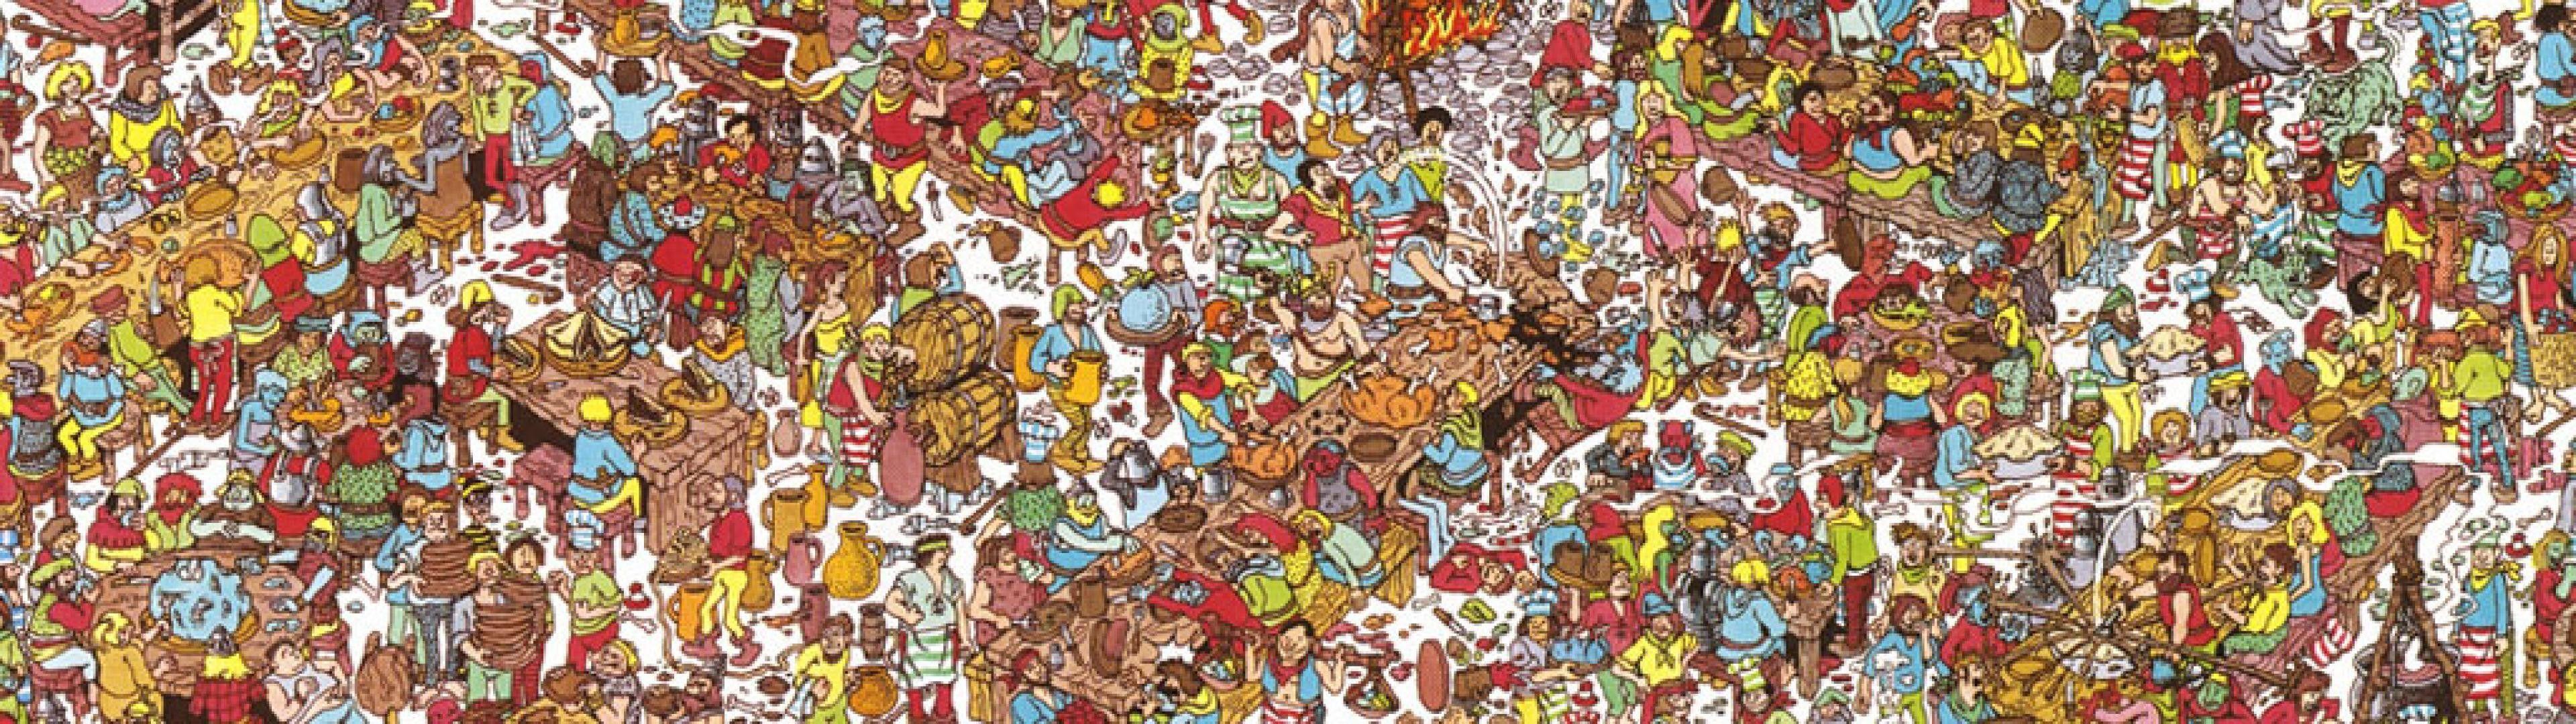 Wheres Waldo HD Wallpaper